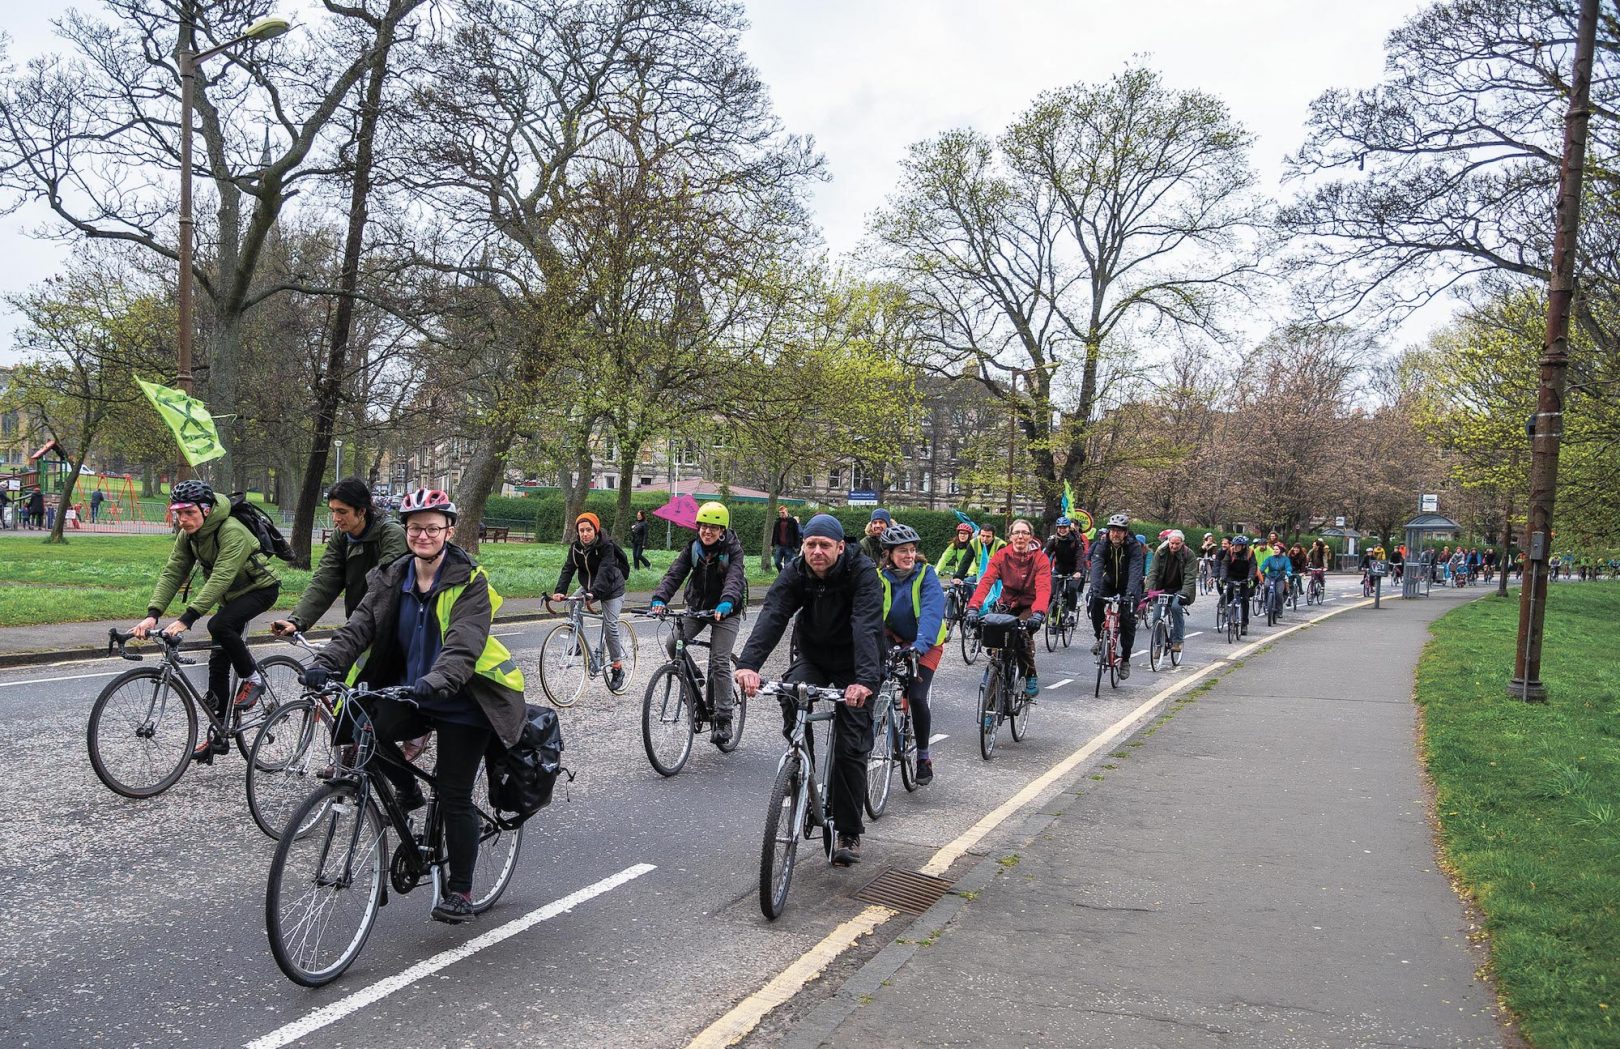 https://www.cyclingweekly.com/news/latest-news/traffic-free-days-begun-edinburgh-city-centre-422408